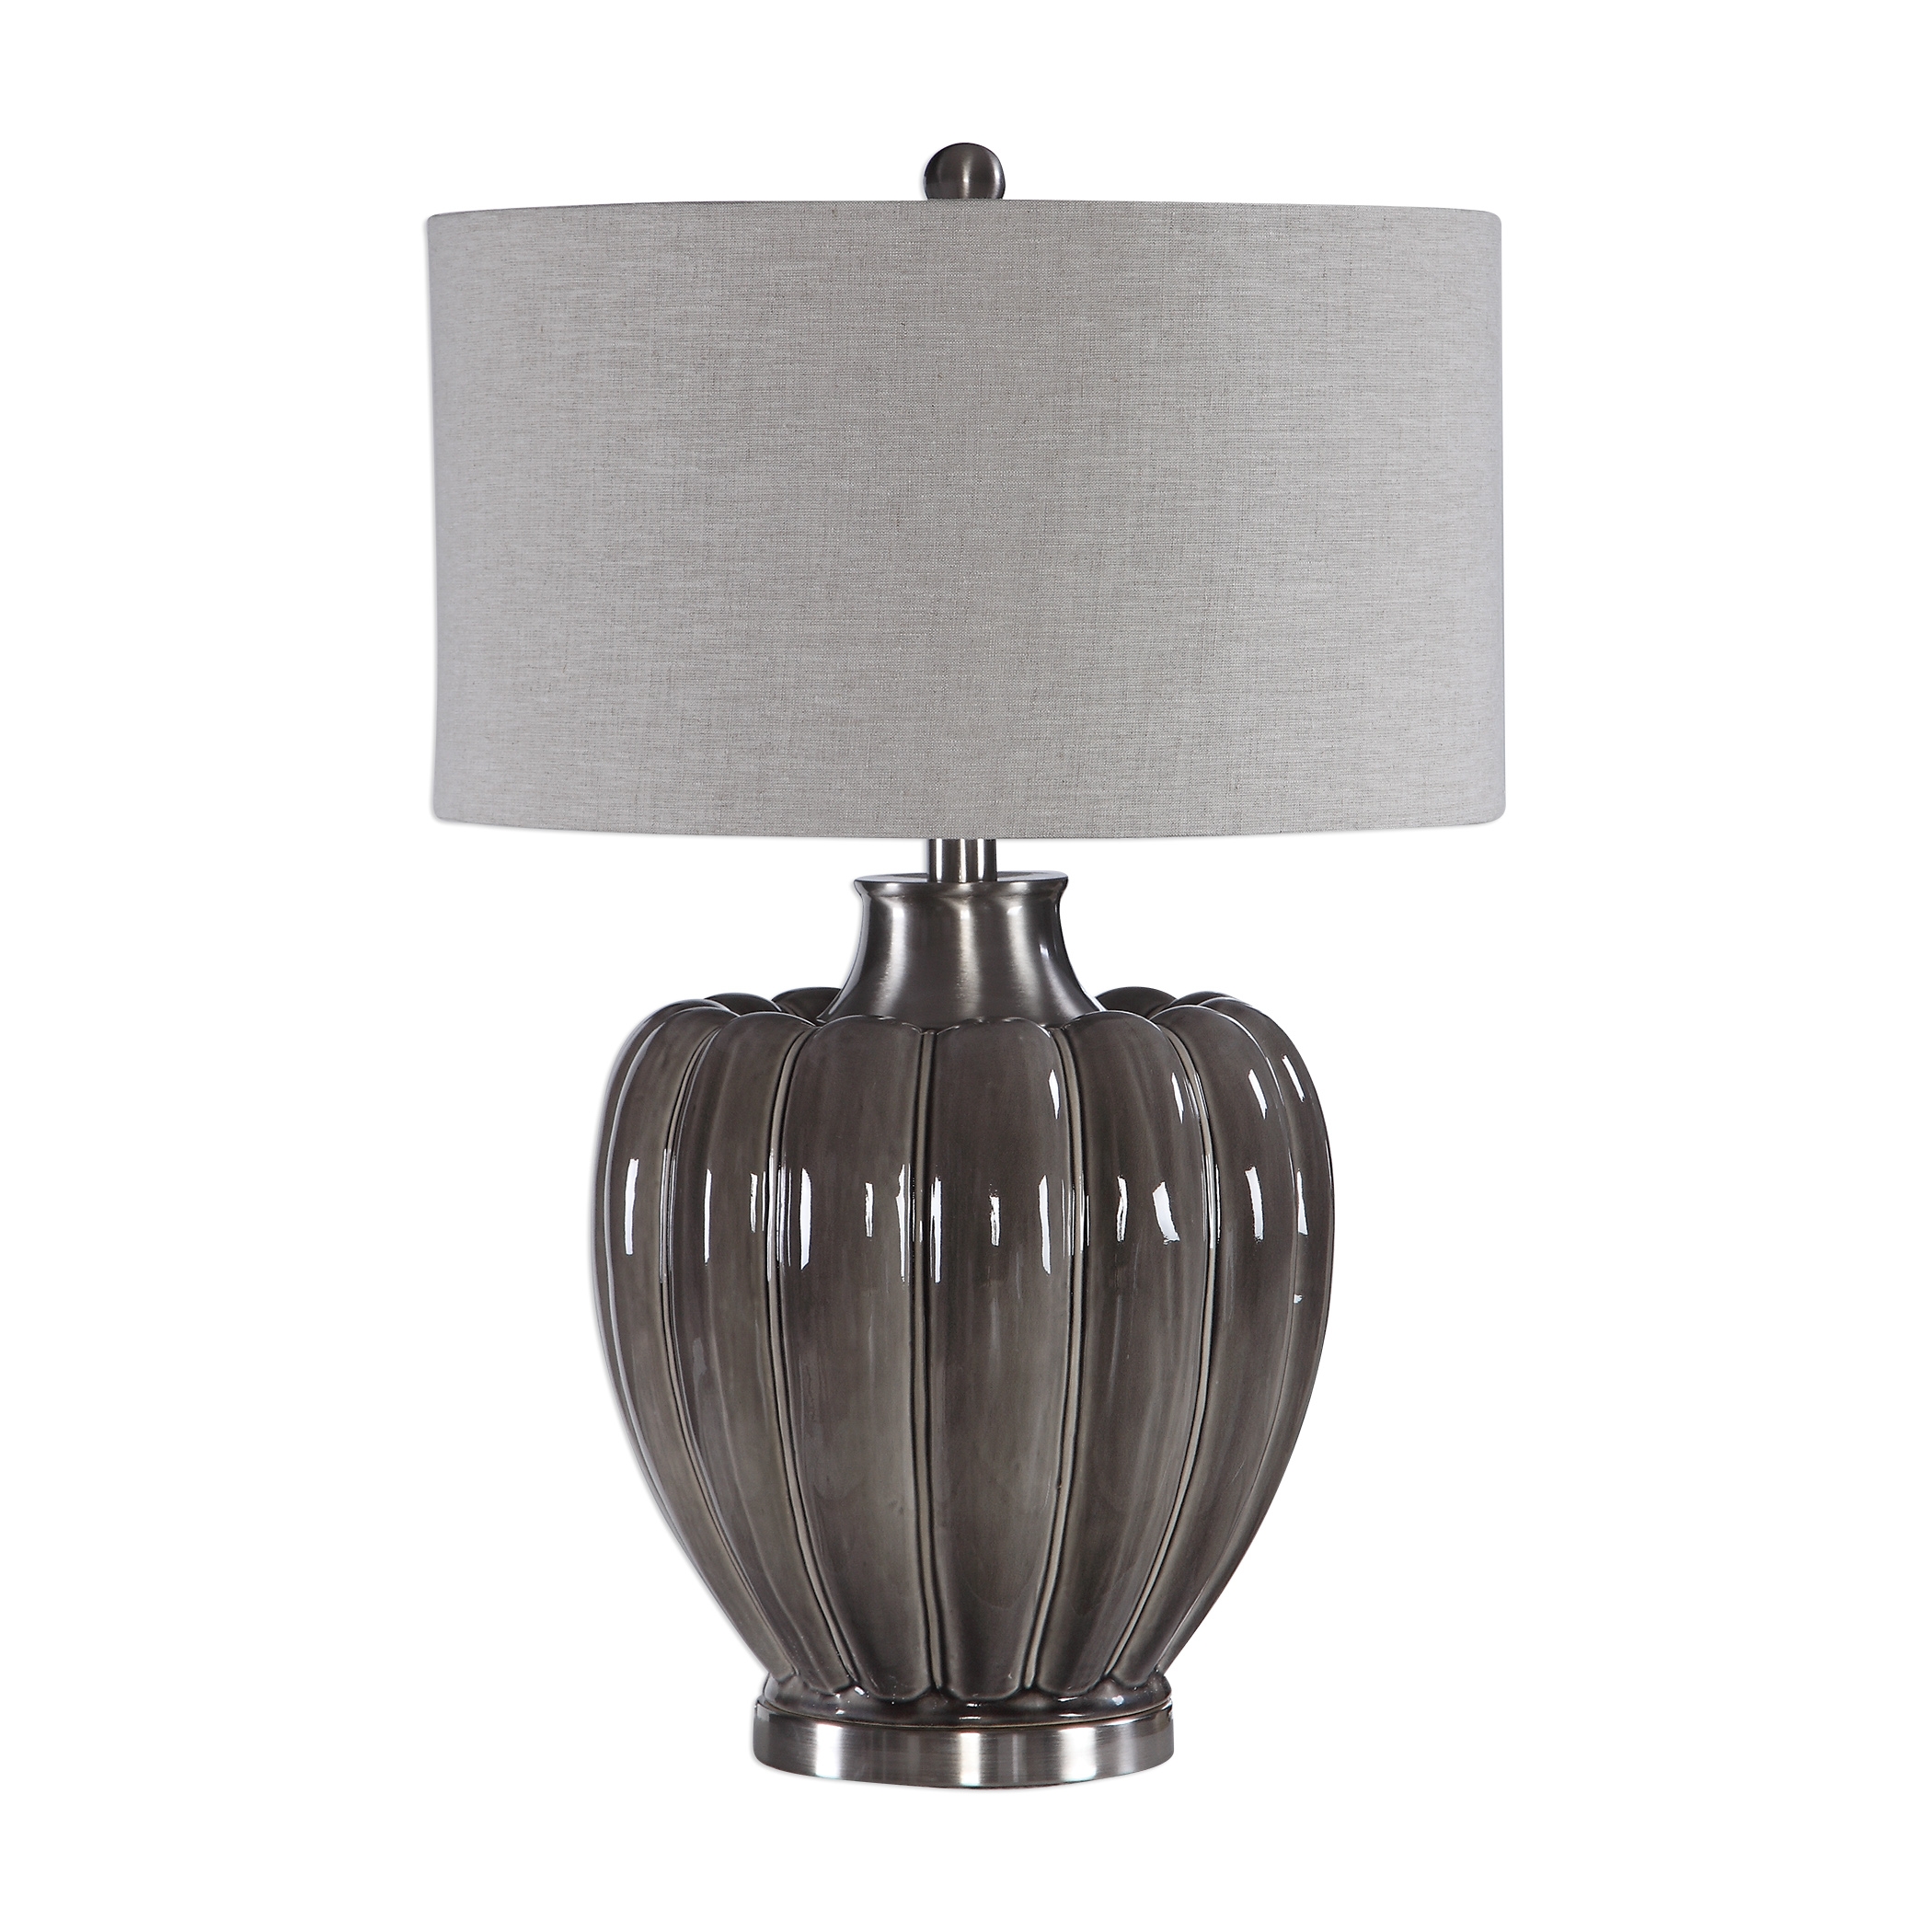 Adler Smoky Gray Table Lamp - Image 4